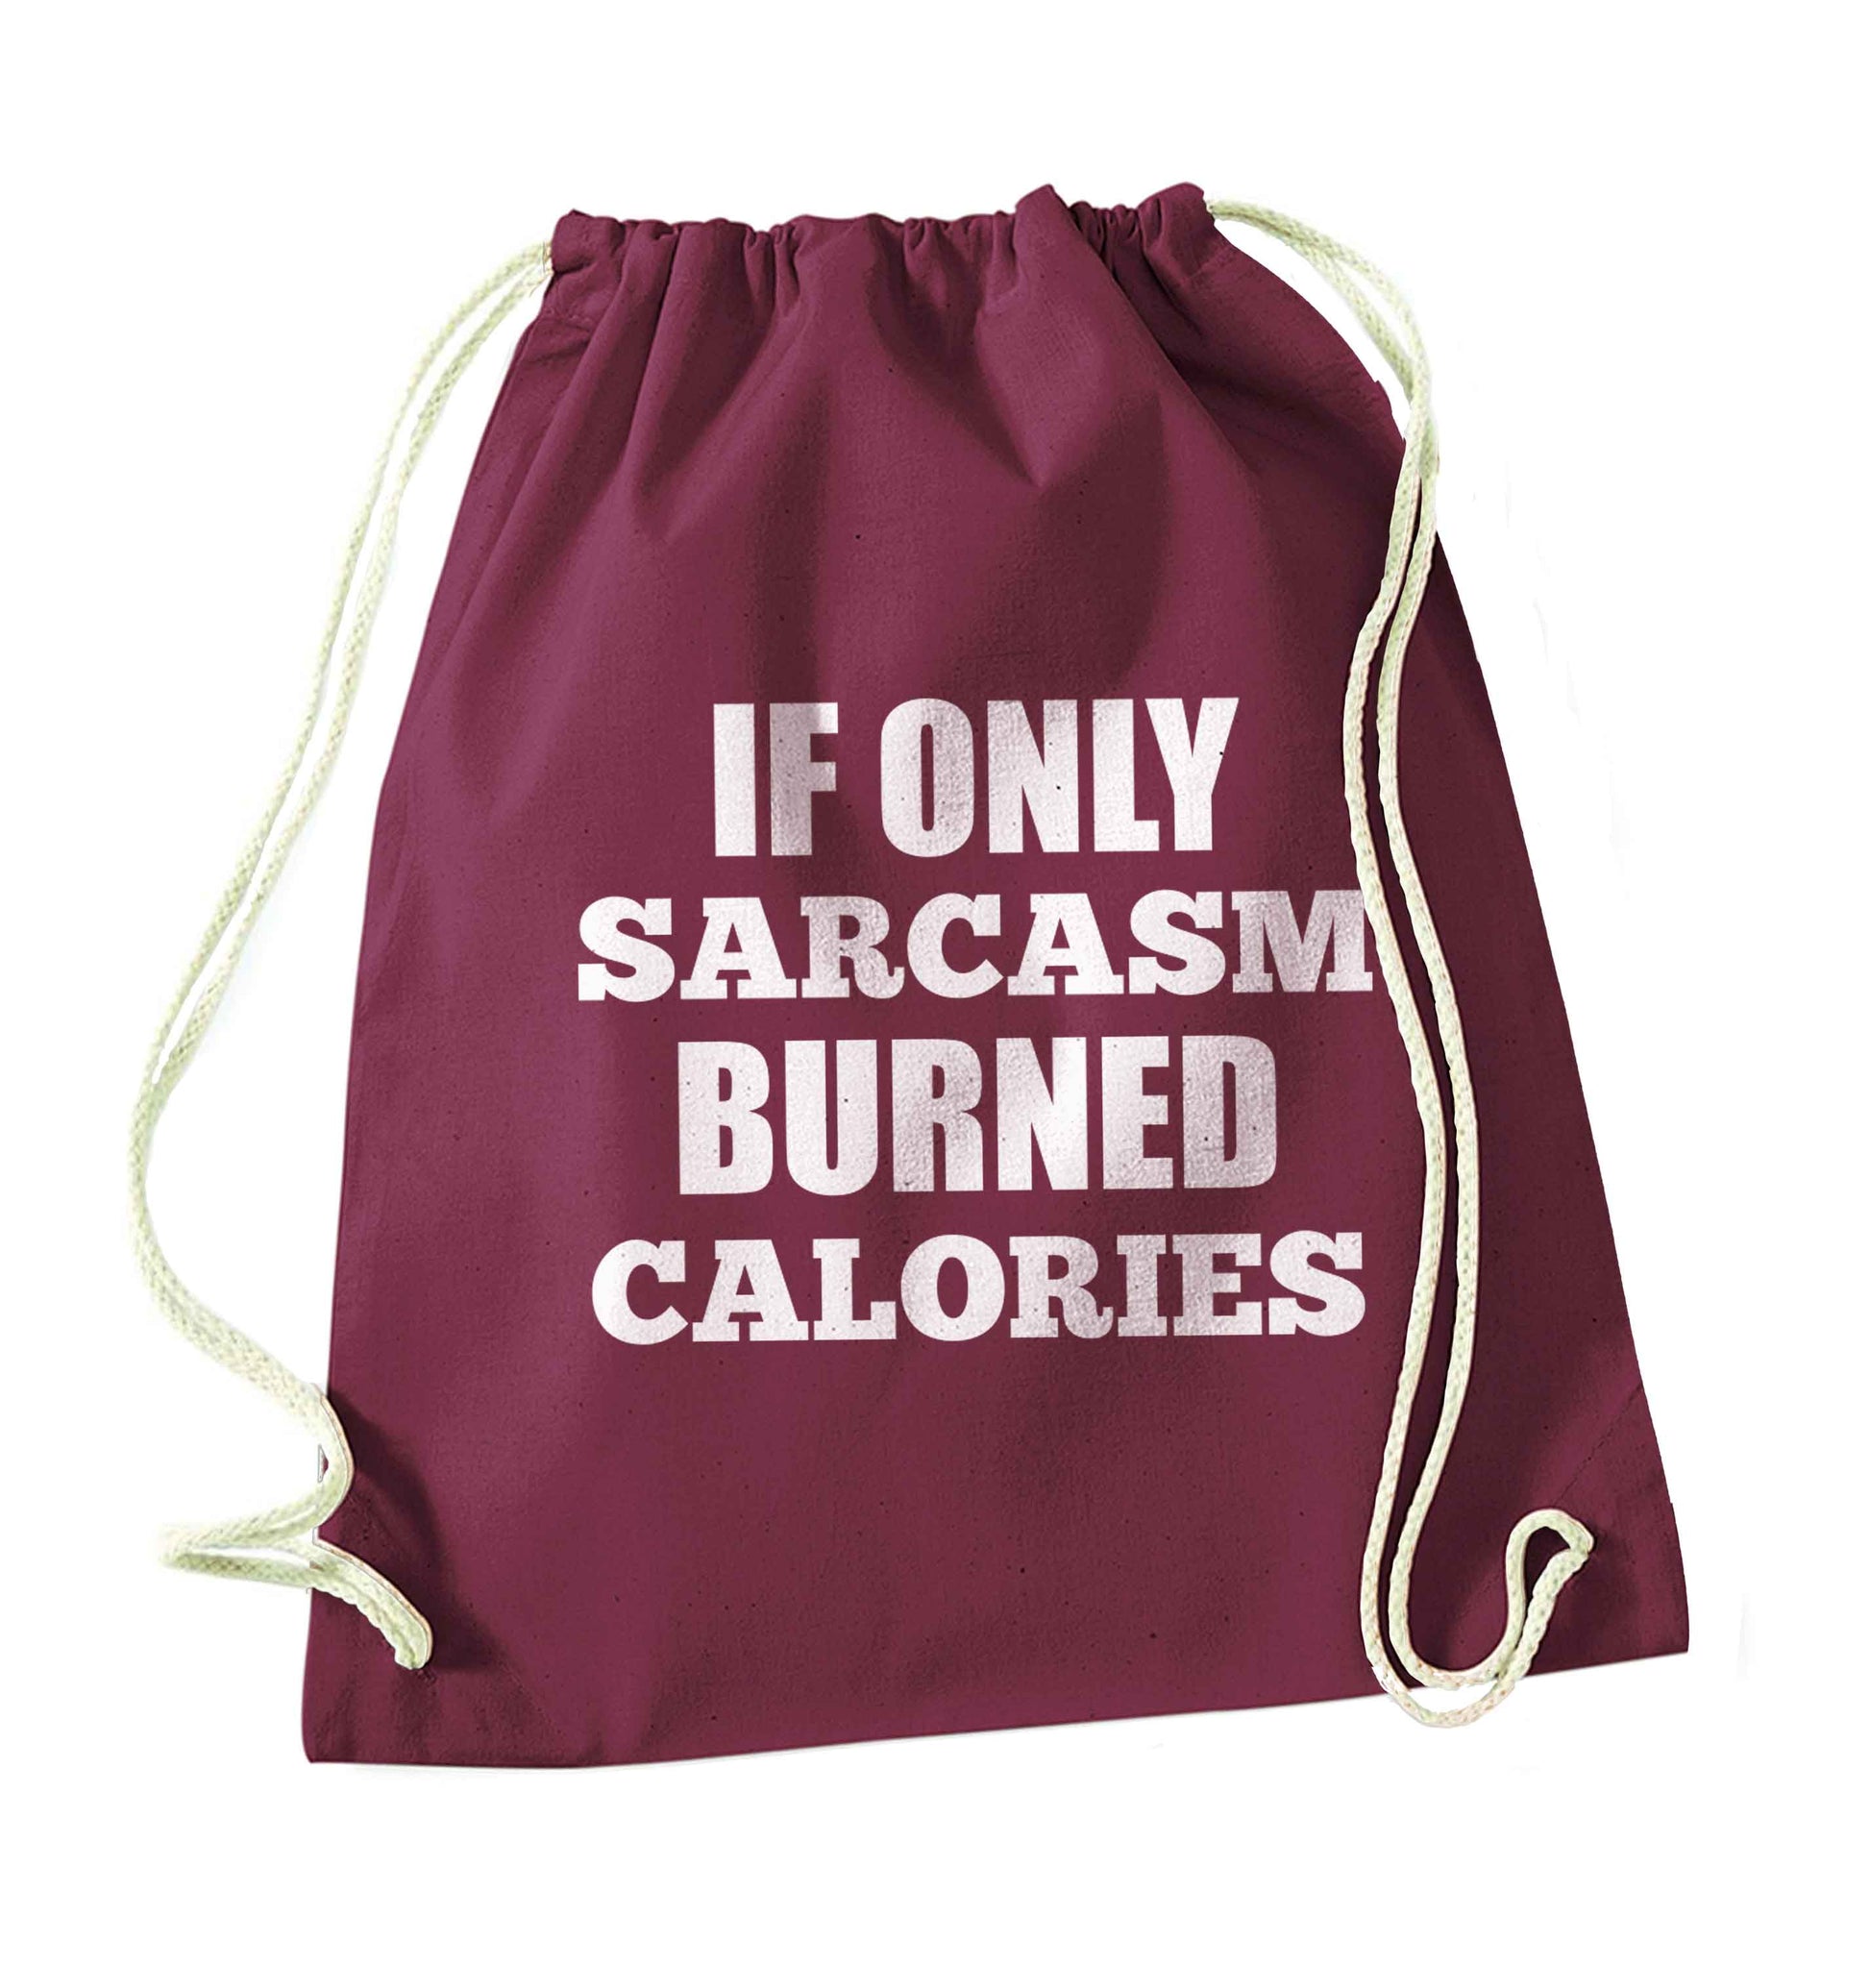 If only sarcasm burned calories maroon drawstring bag